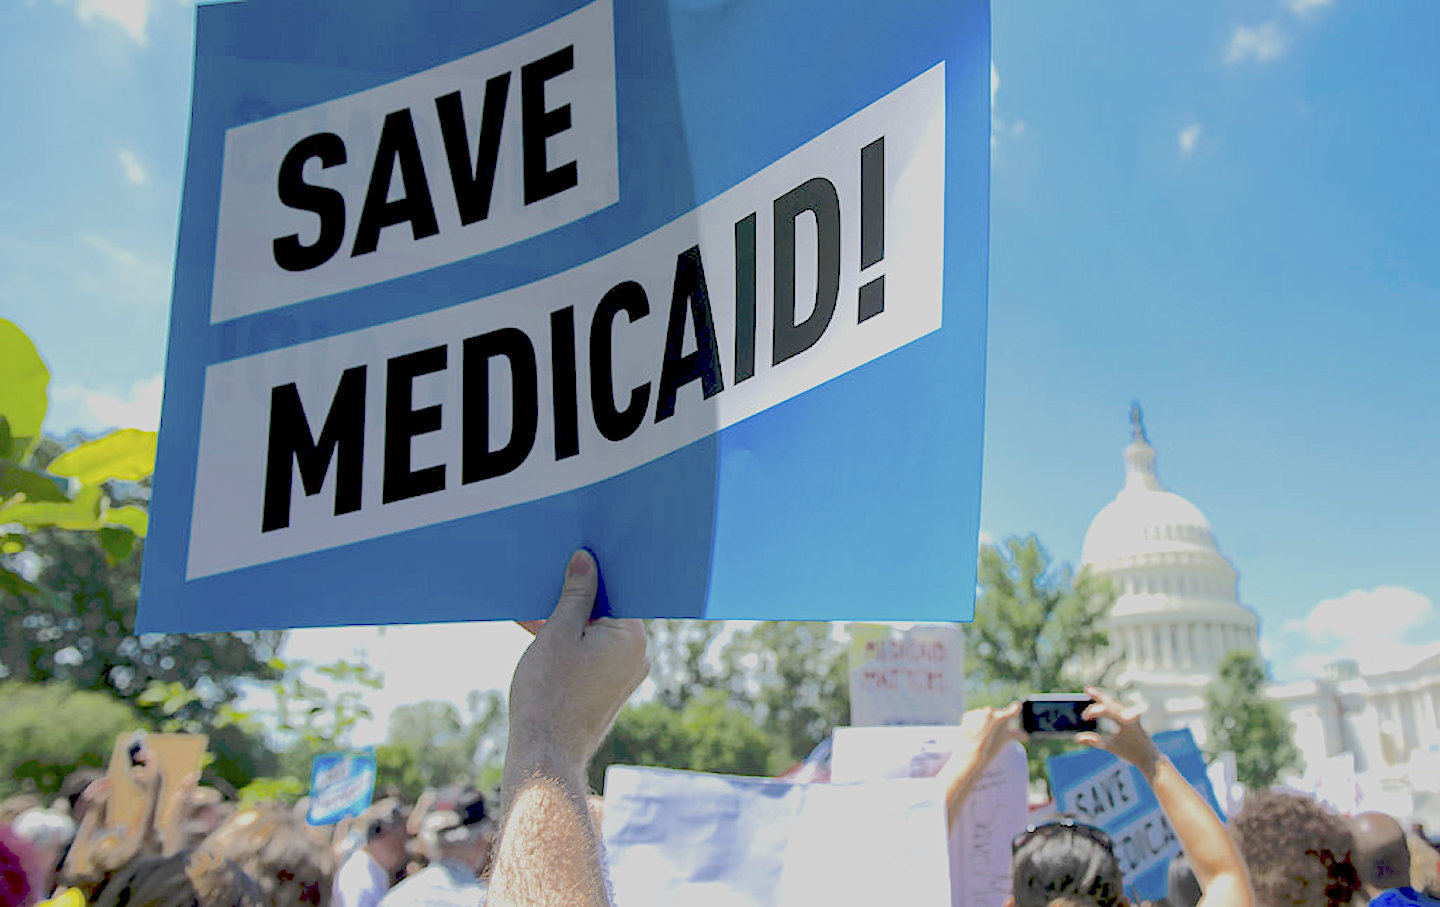 Medicaid Cuts Rally